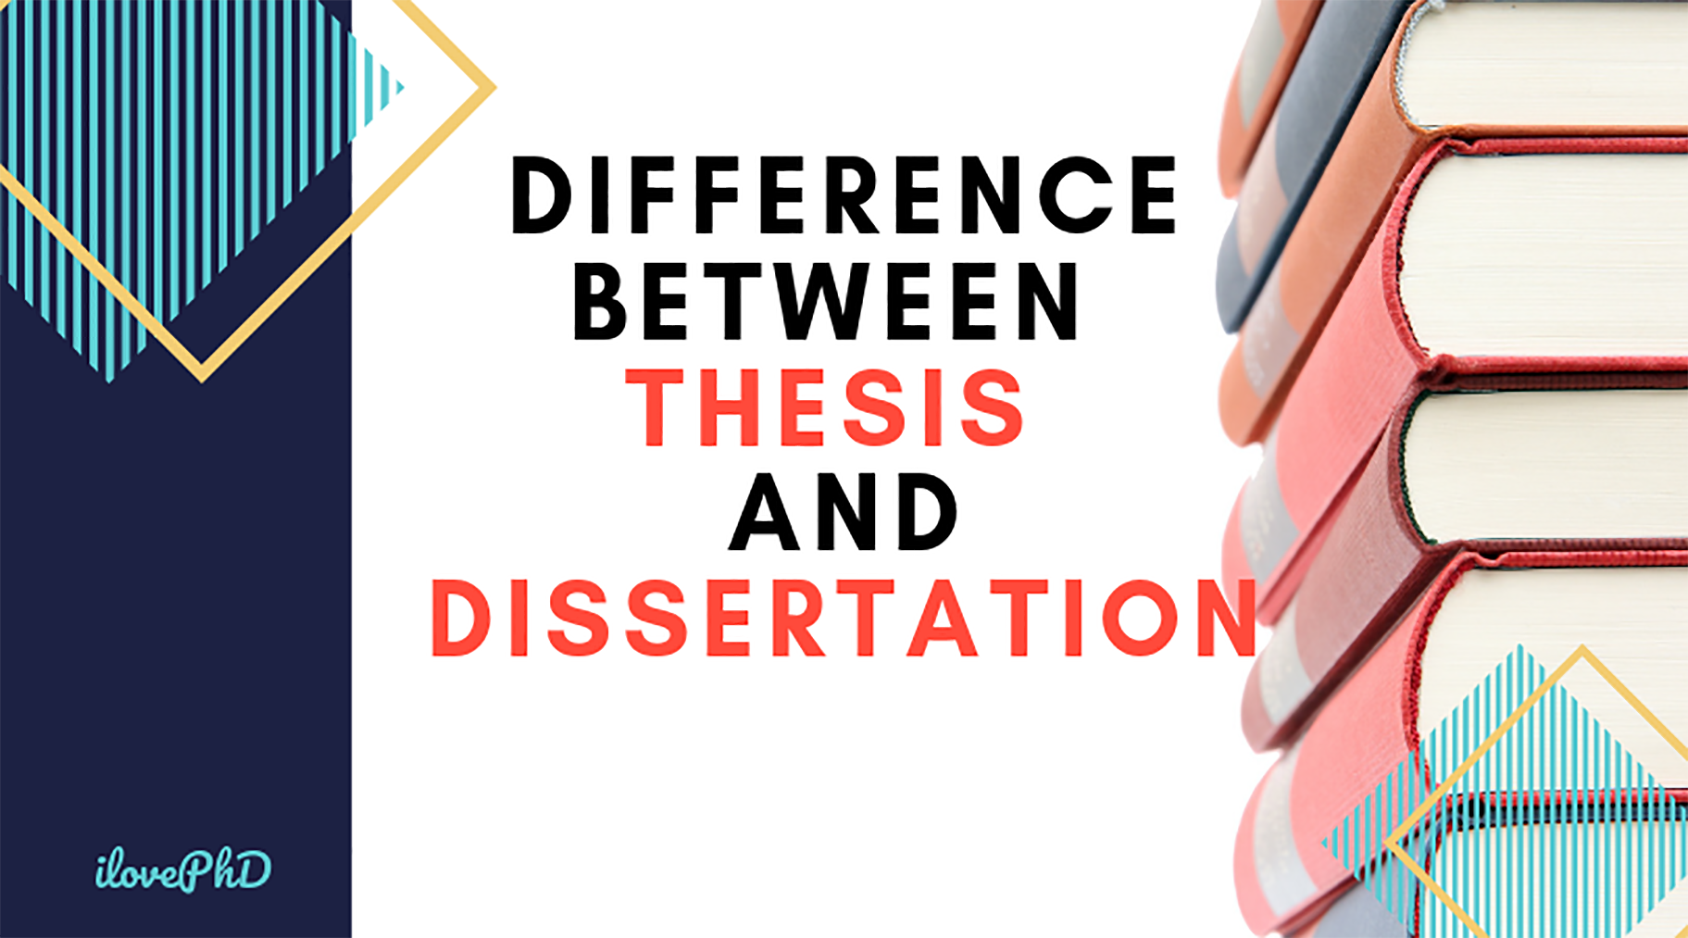 mini dissertation vs full dissertation